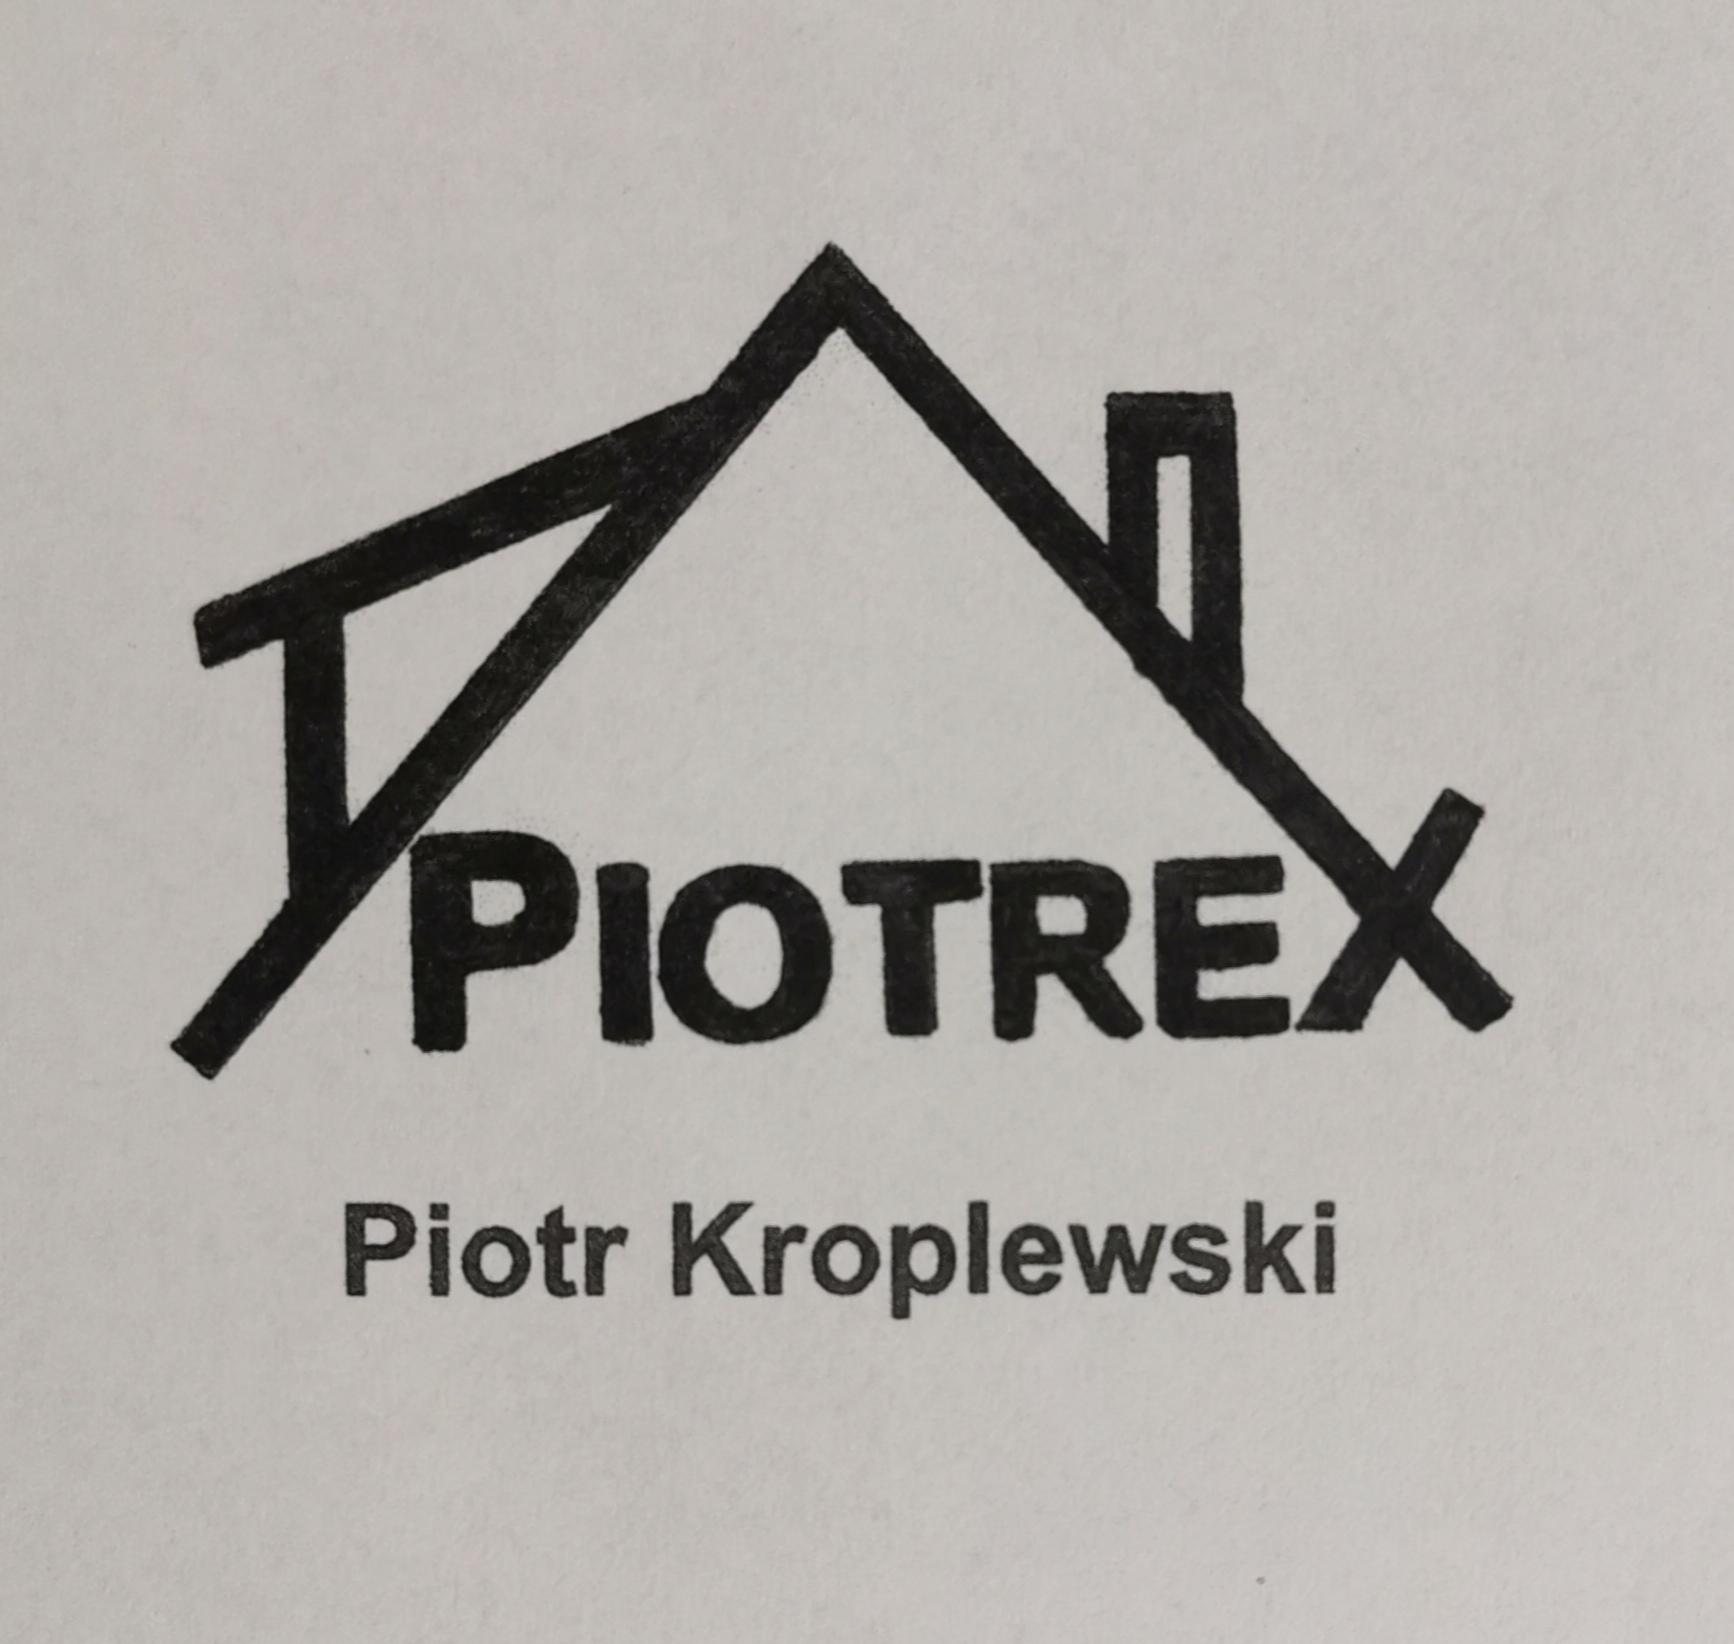 USŁUGI OGÓLNOBUDOWLANE "PIOTREX" Piotr Kroplewski-logo